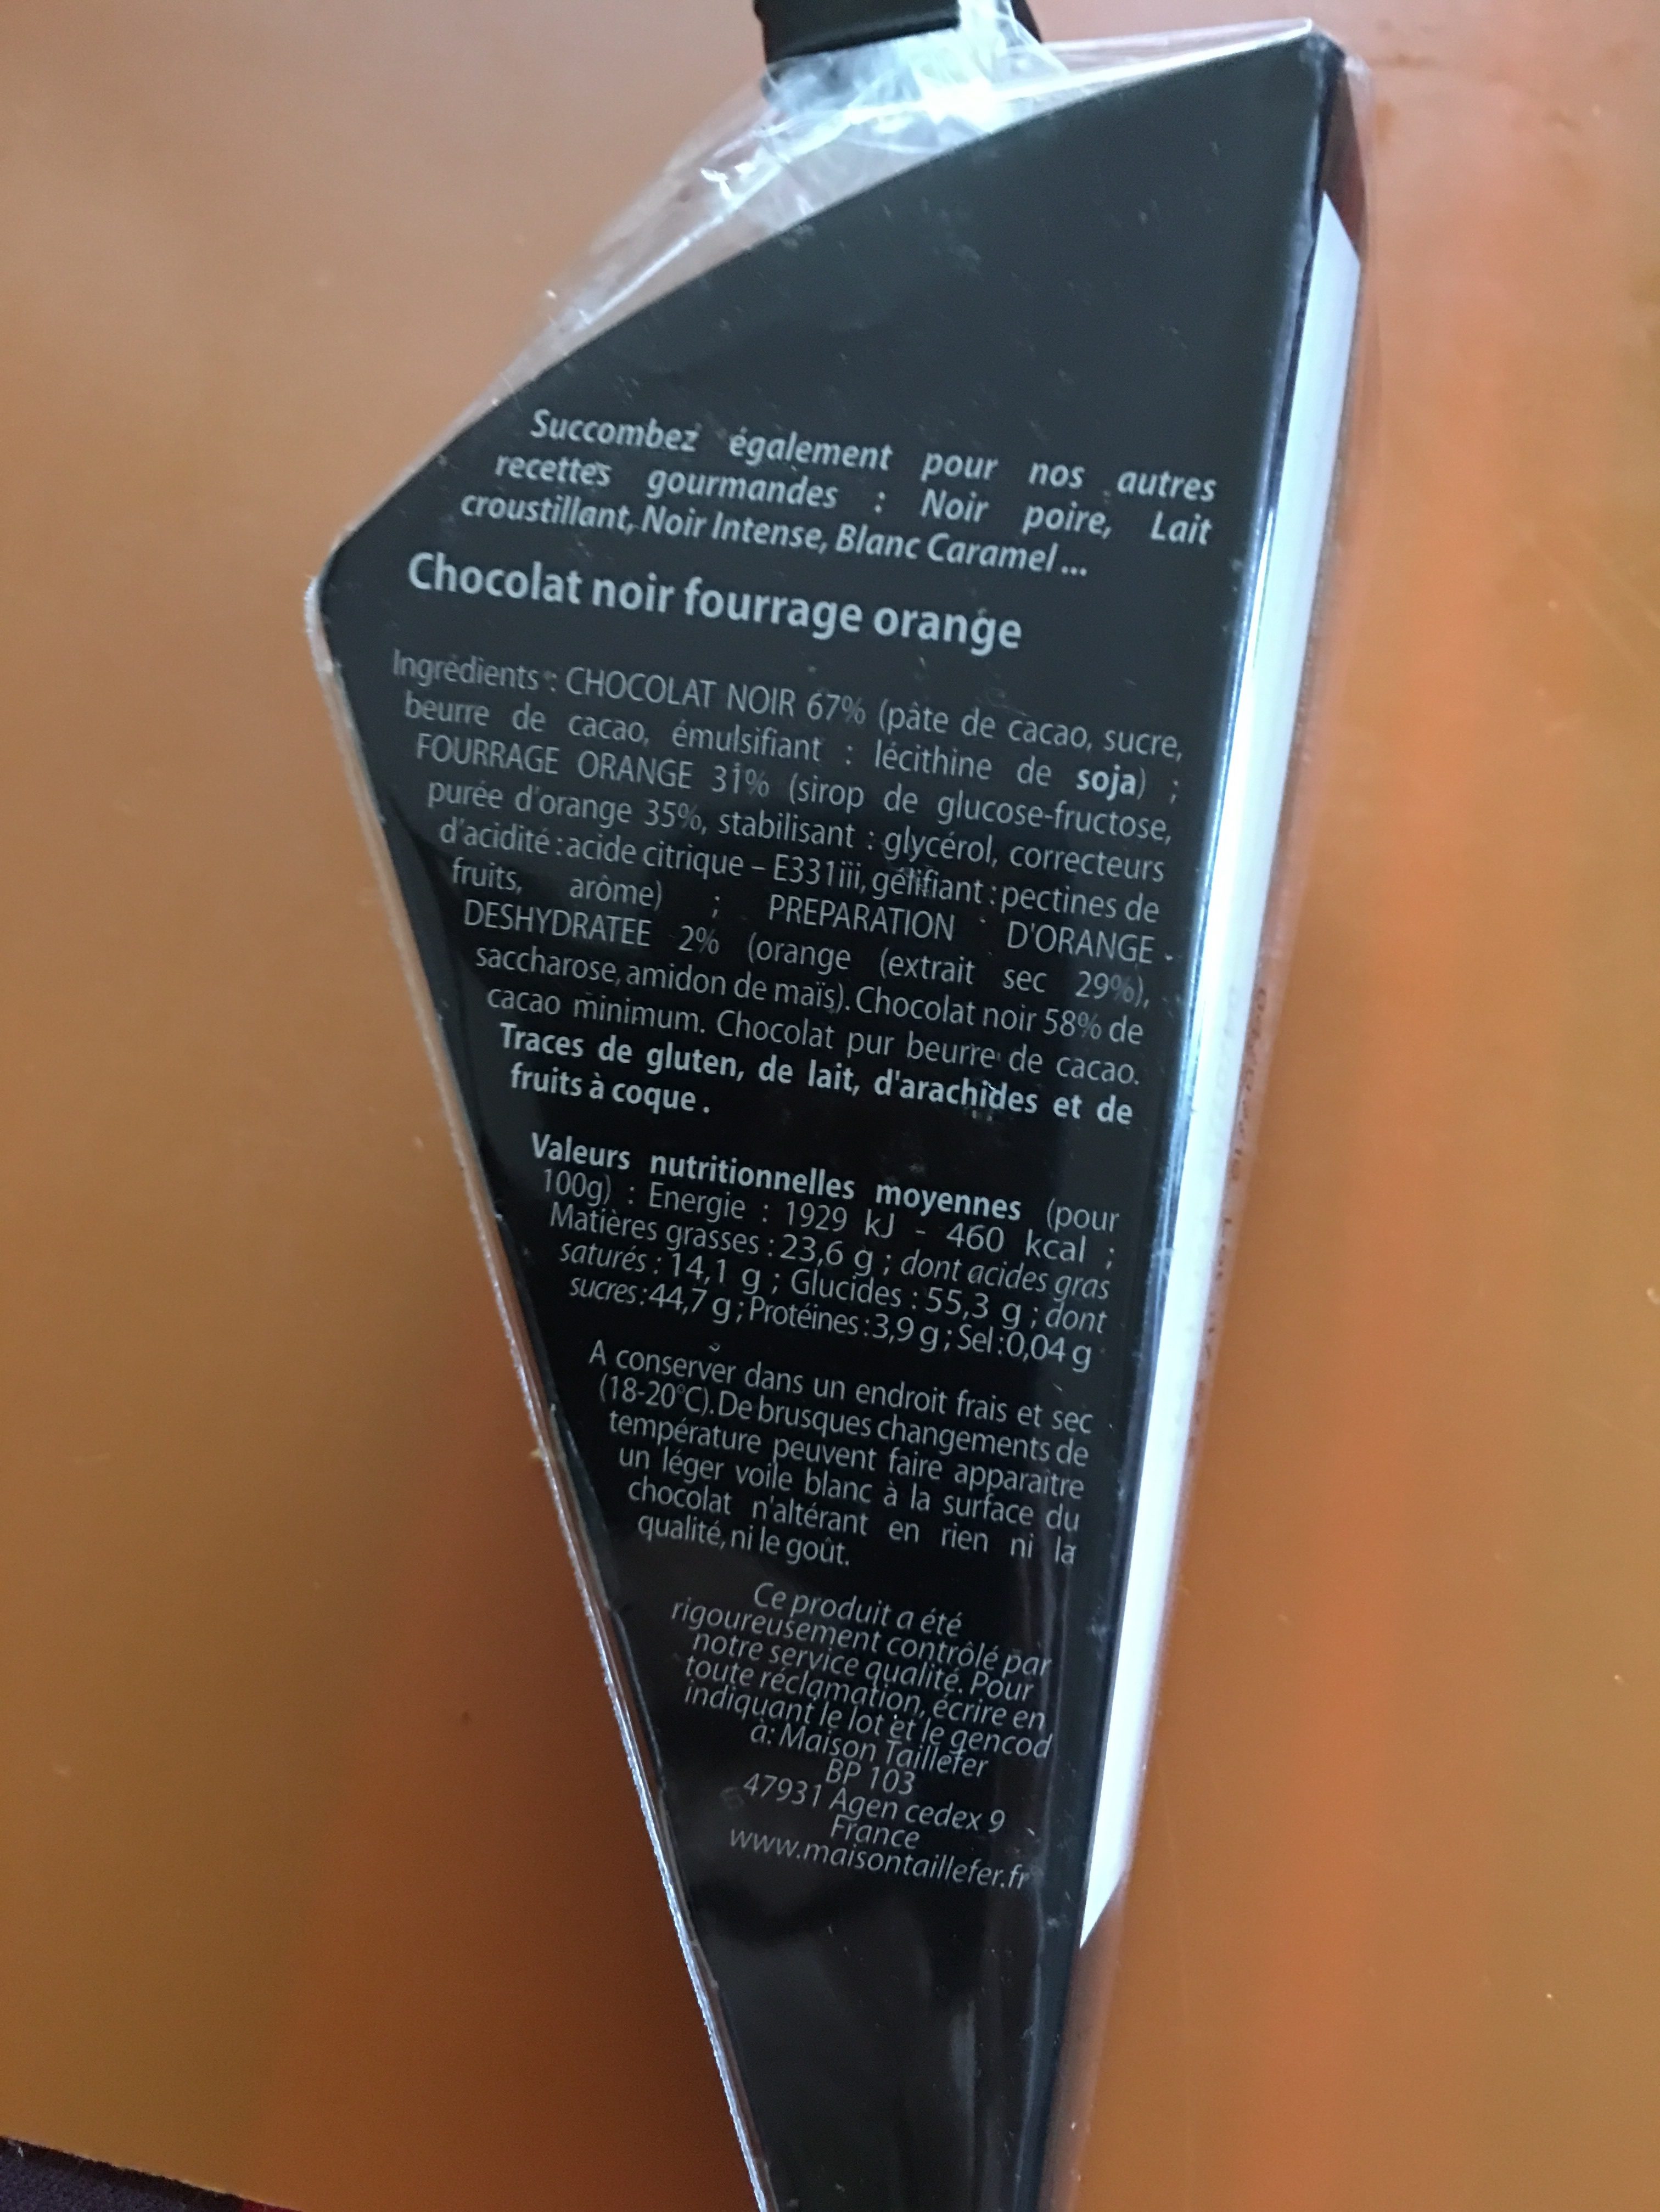 Maison Taillefer Chocolat Noir Orange Cornet 150G - Ingrédients